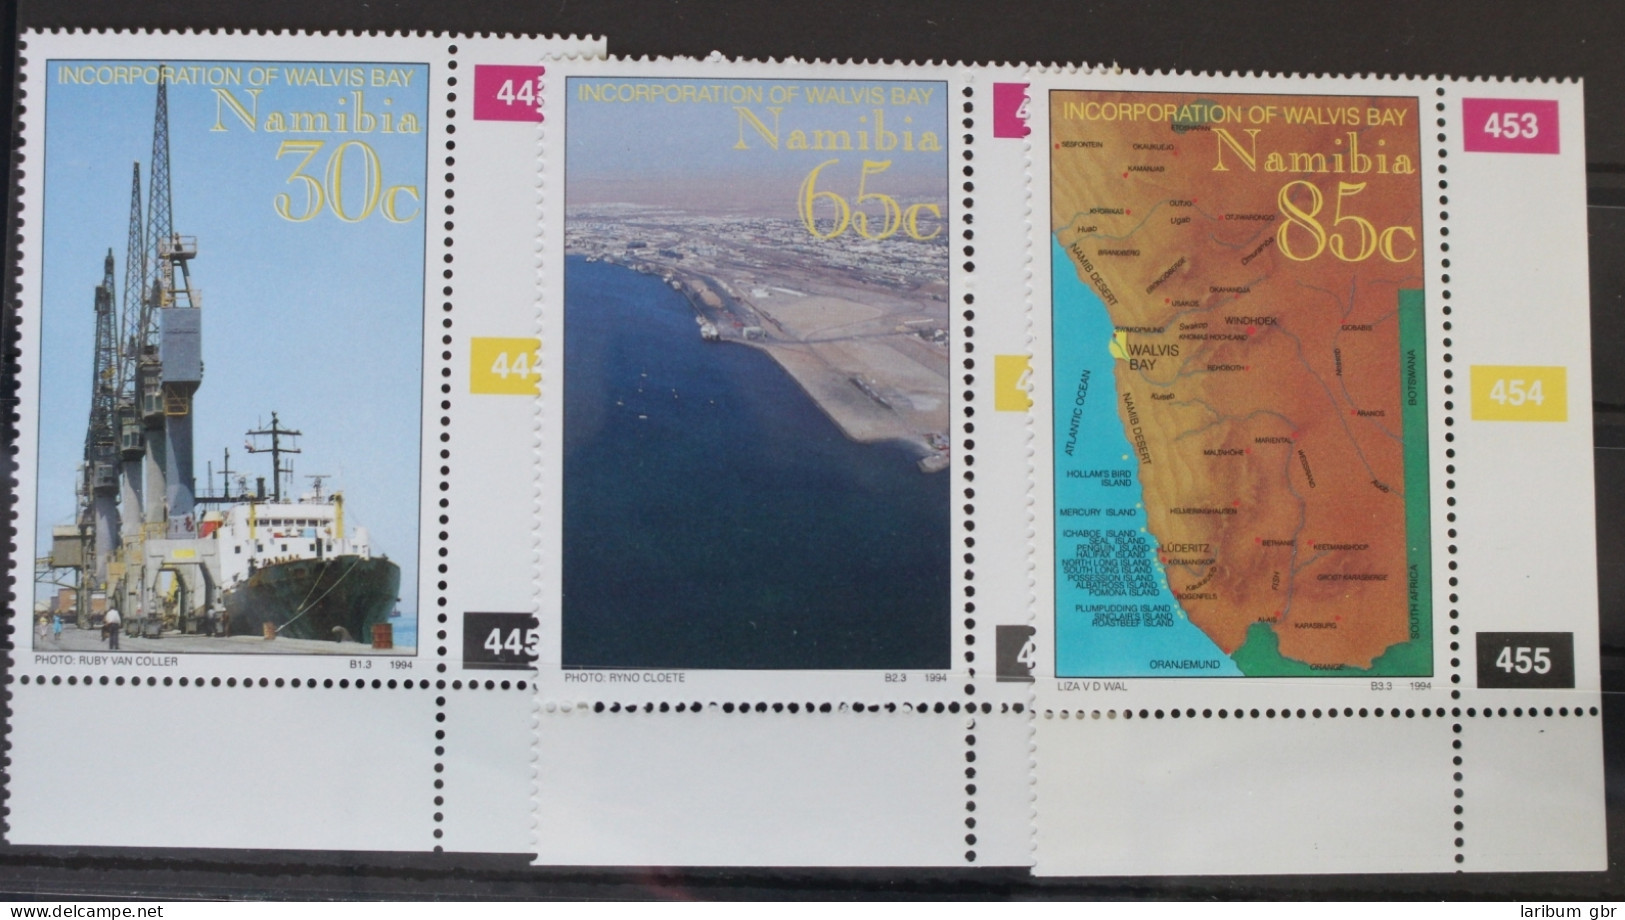 Namibia 768-770 Postfrisch #VD141 - Namibia (1990- ...)